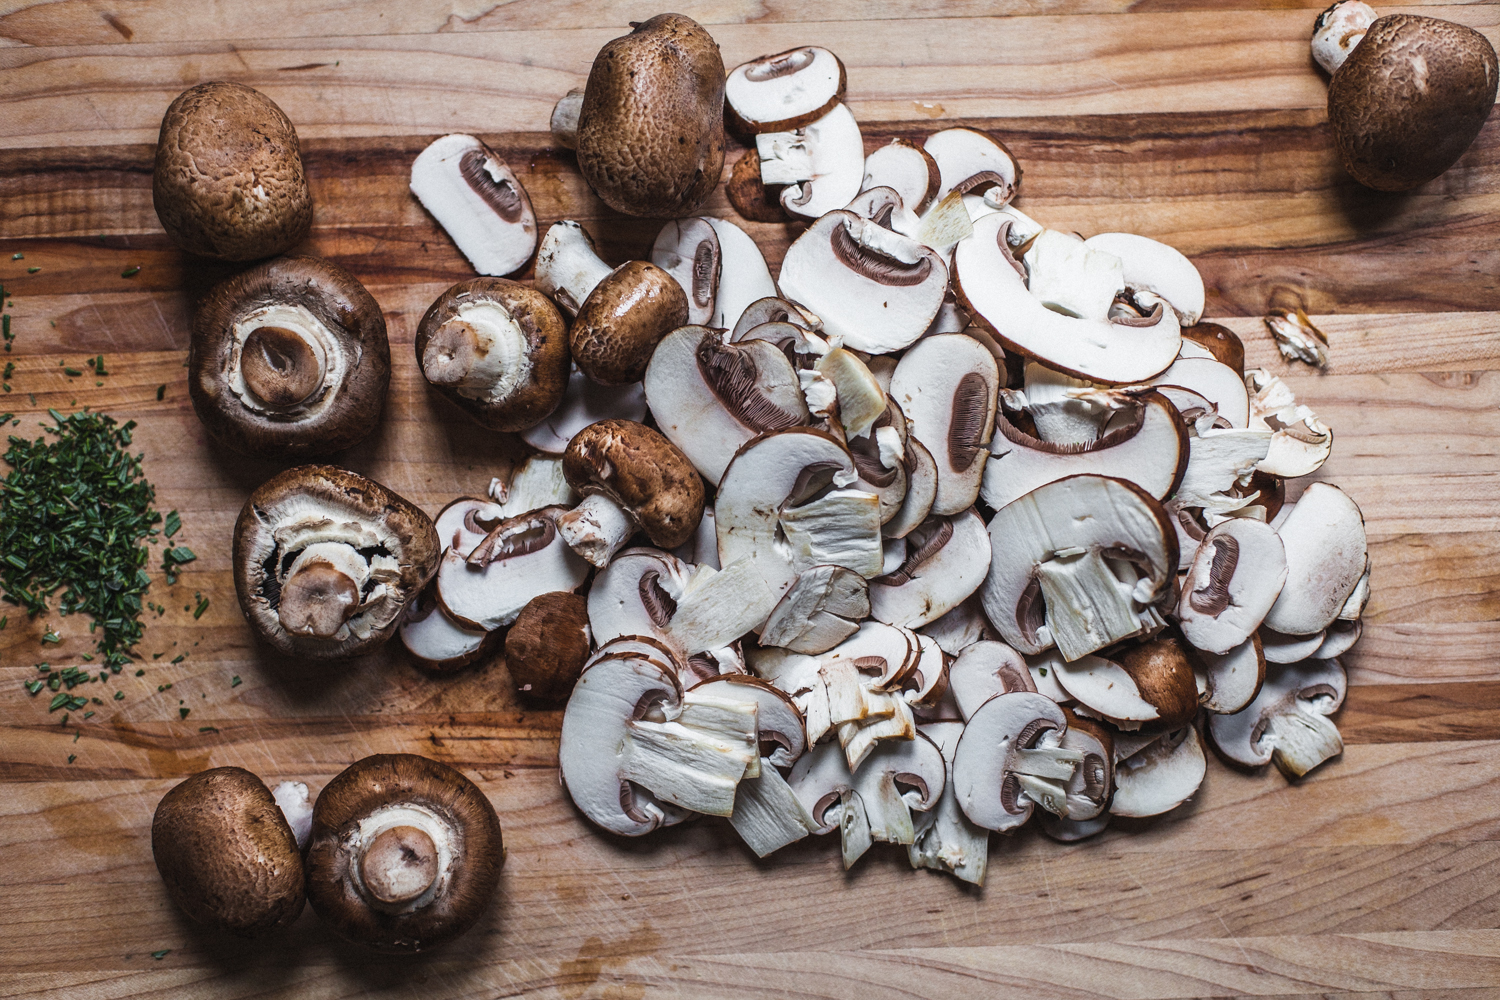 Fried Potatoes with Mushrooms and Onions - Golubka Kitchen